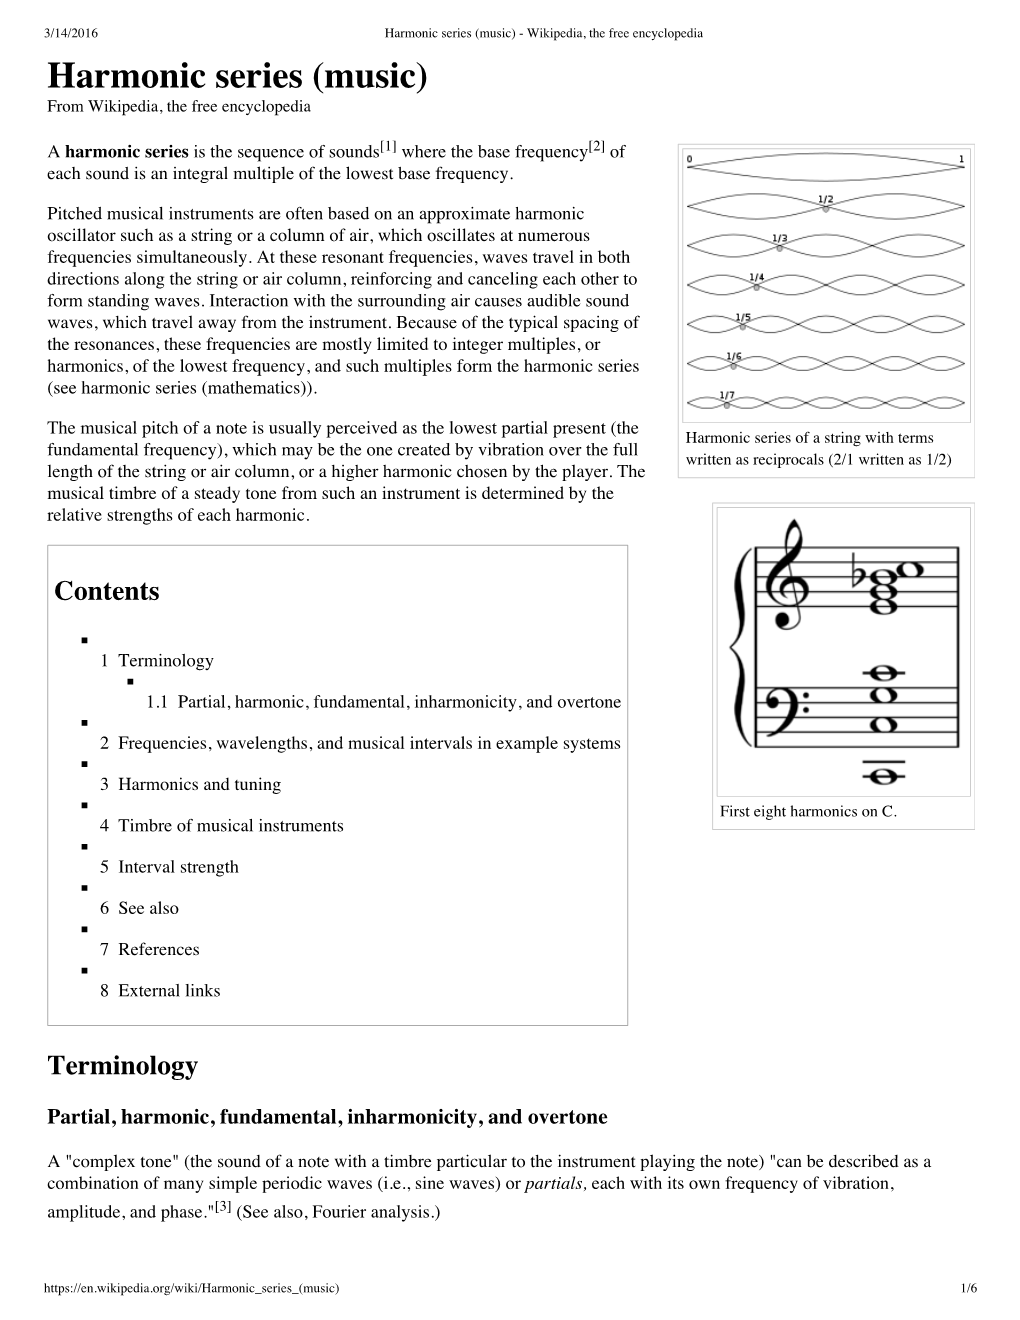 Harmonic Series (Music) - Wikipedia, the Free Encyclopedia Harmonic Series (Music) from Wikipedia, the Free Encyclopedia